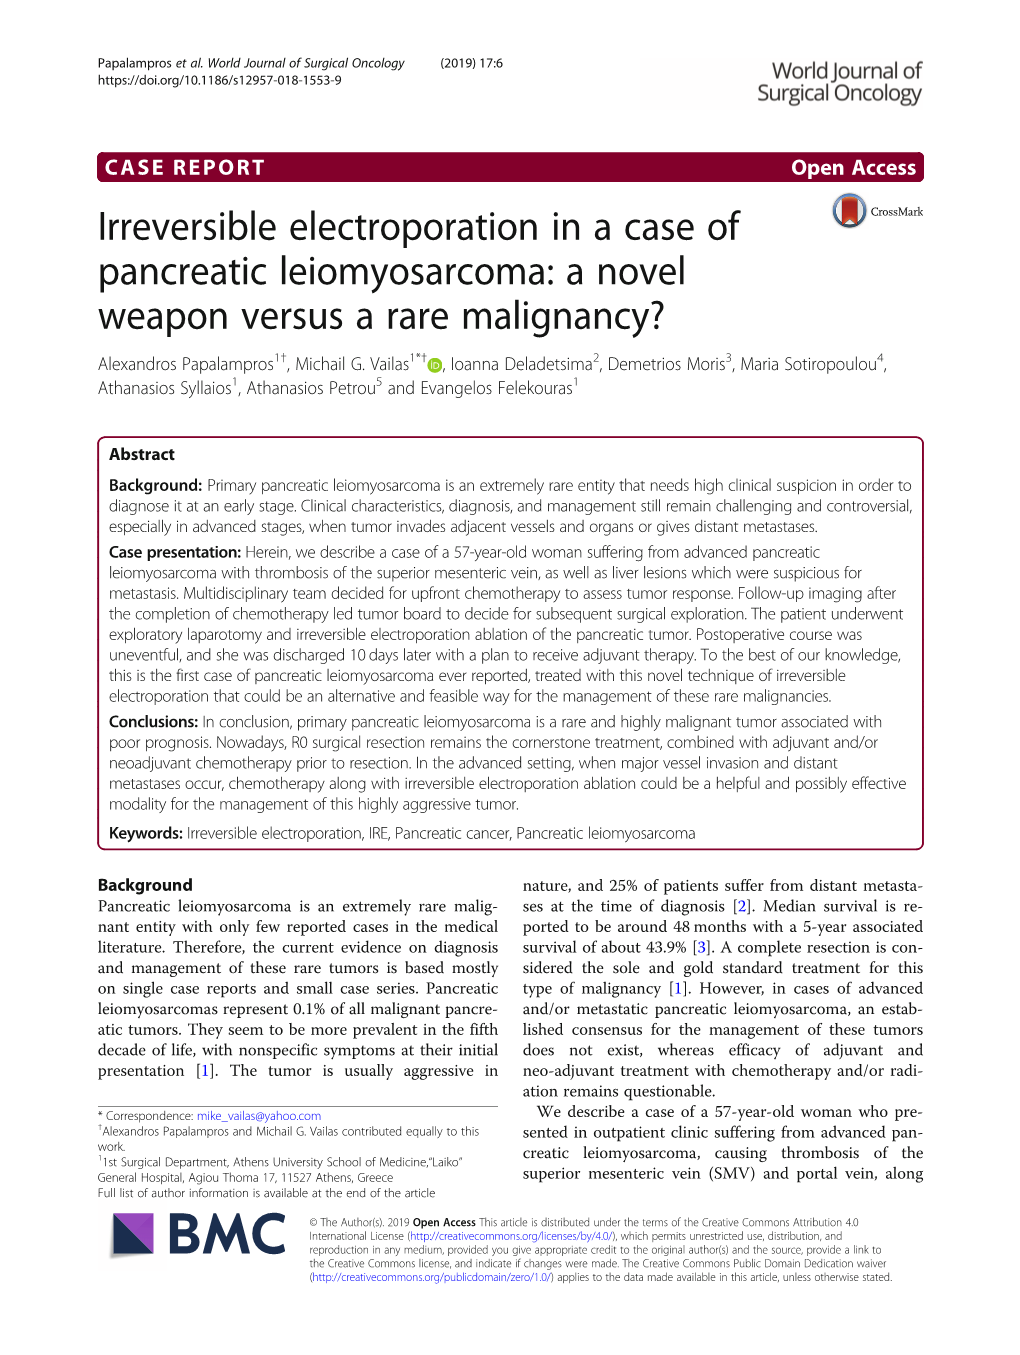 Irreversible Electroporation in a Case of Pancreatic Leiomyosarcoma: a Novel Weapon Versus a Rare Malignancy? Alexandros Papalampros1†, Michail G